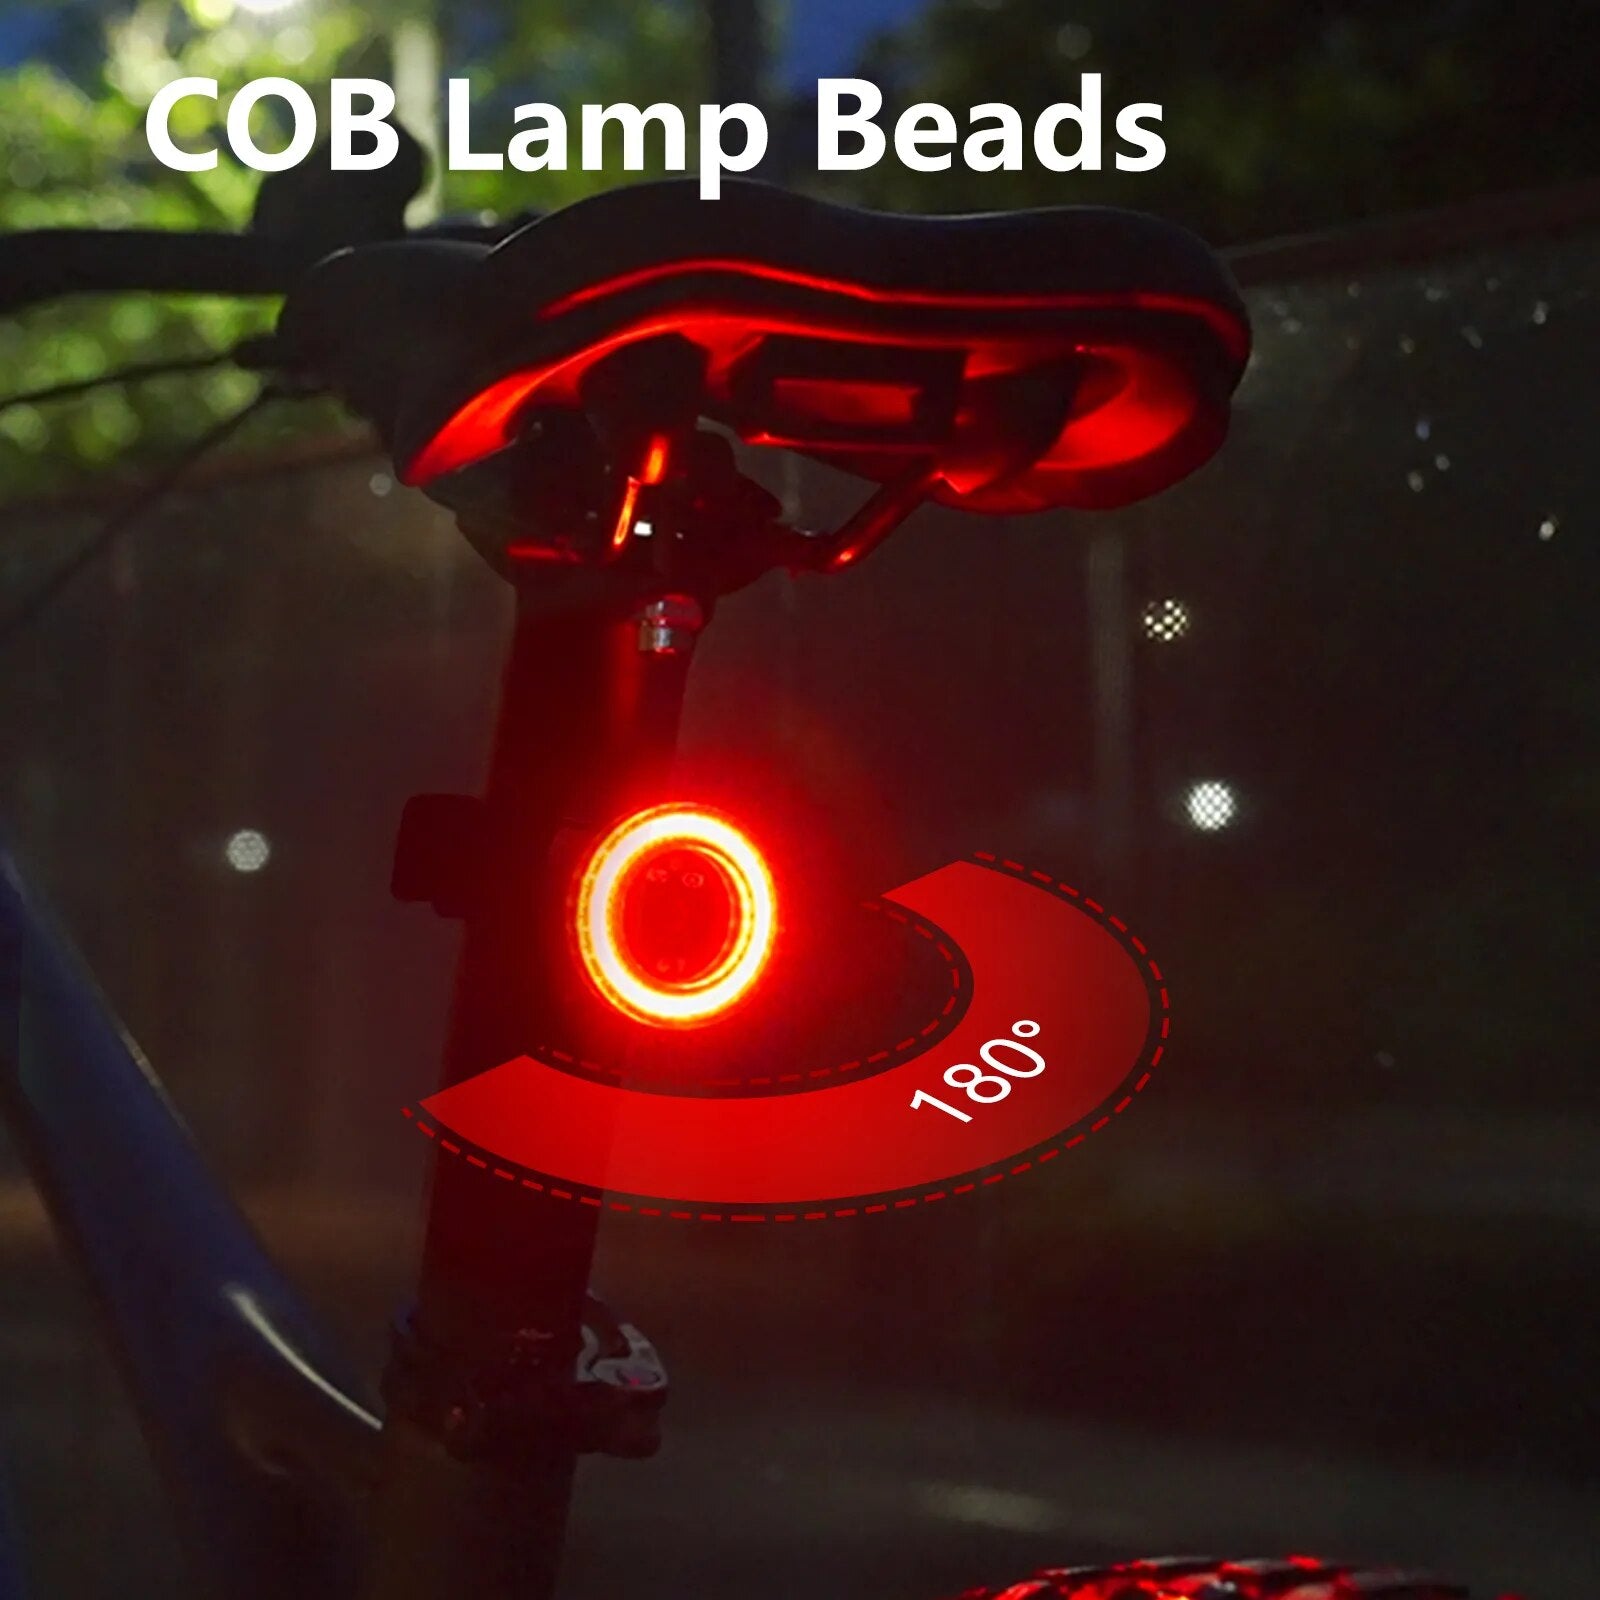 Luz LED inteligente con sensor de freno para bicicleta, luz trasera resistente al agua para ciclismo